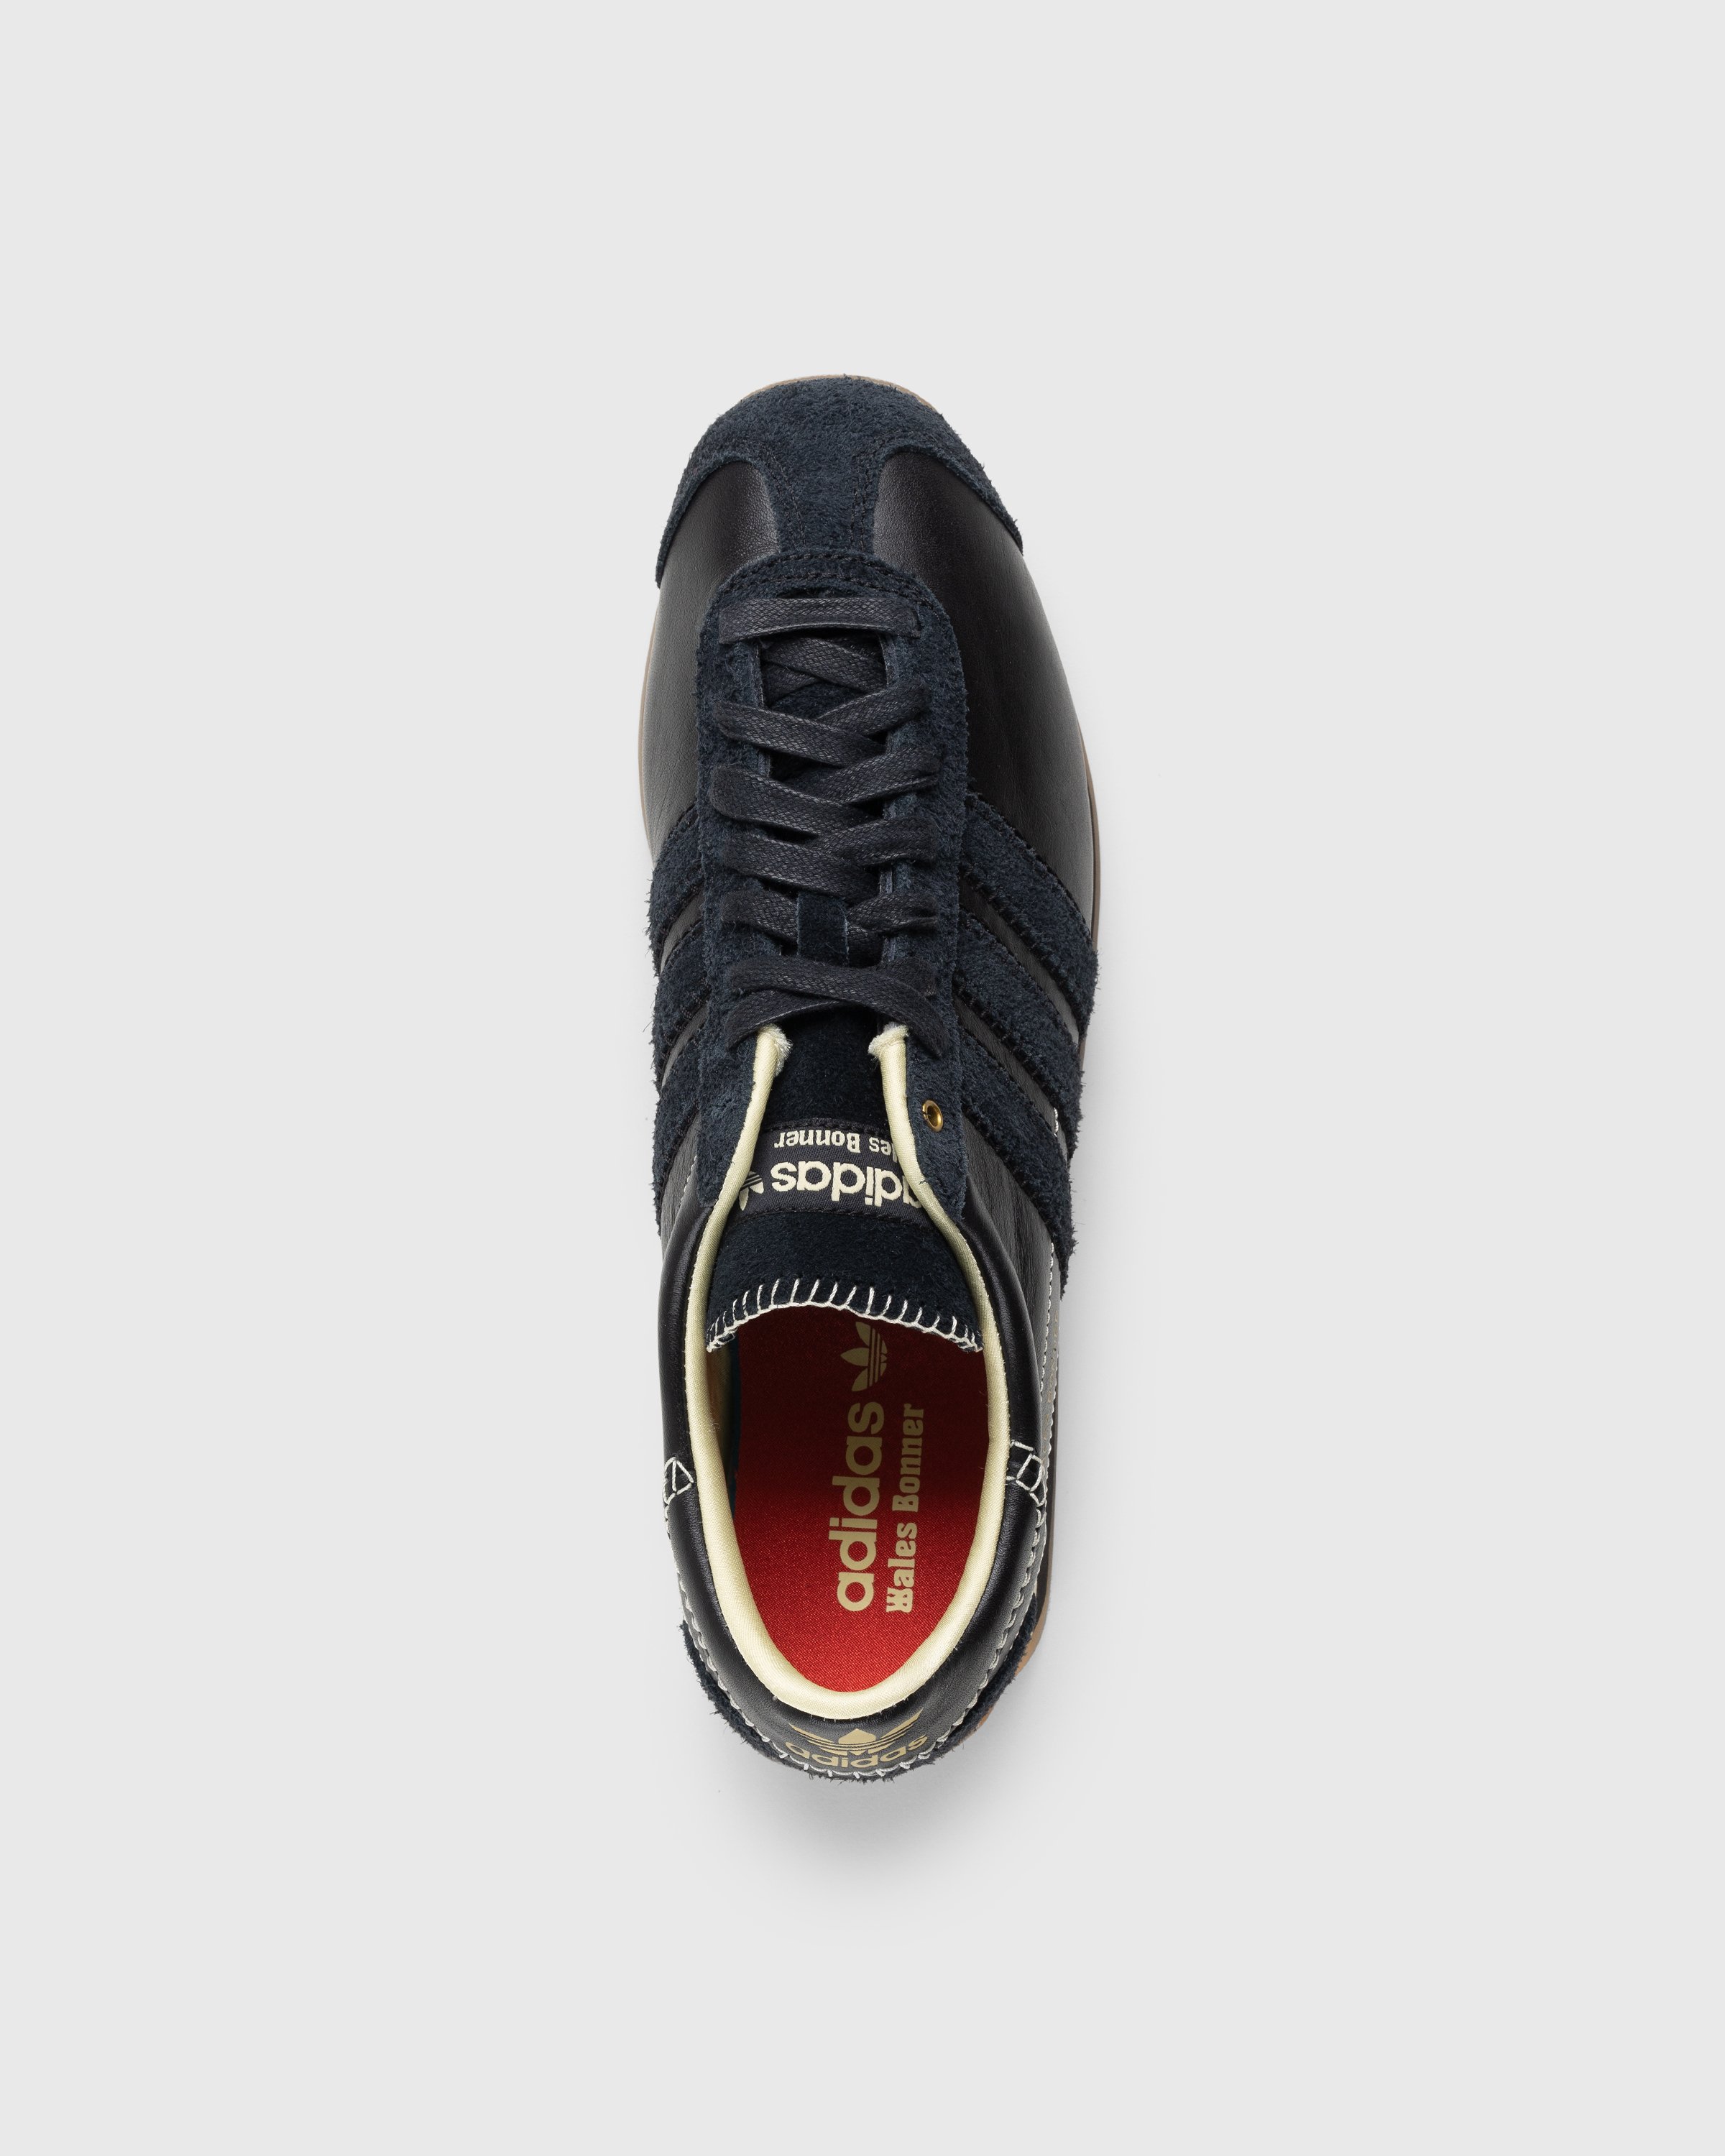 Adidas x Wales Bonner - WB Country Core Black/Core Black/Easy Yellow - Footwear - Black - Image 5